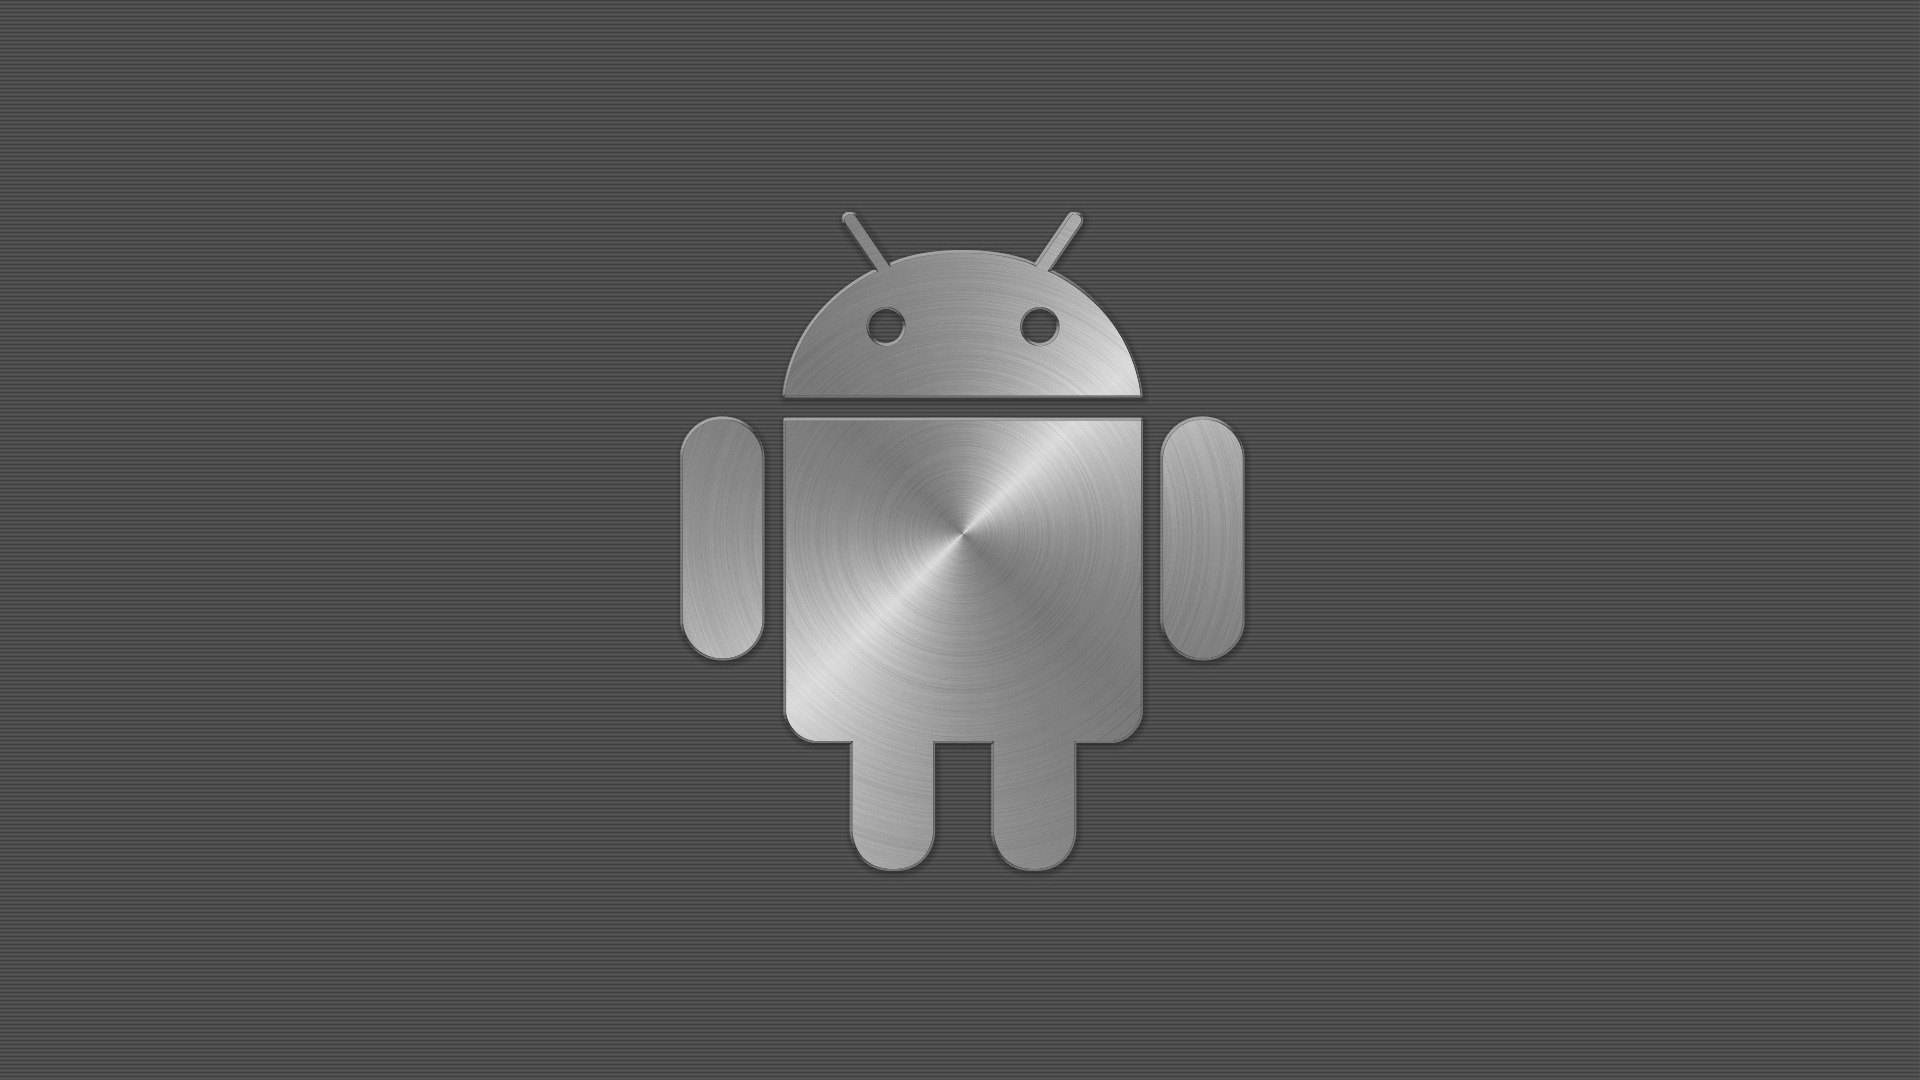 Android Logo Wallpapers HD - PixelsTalk.Net